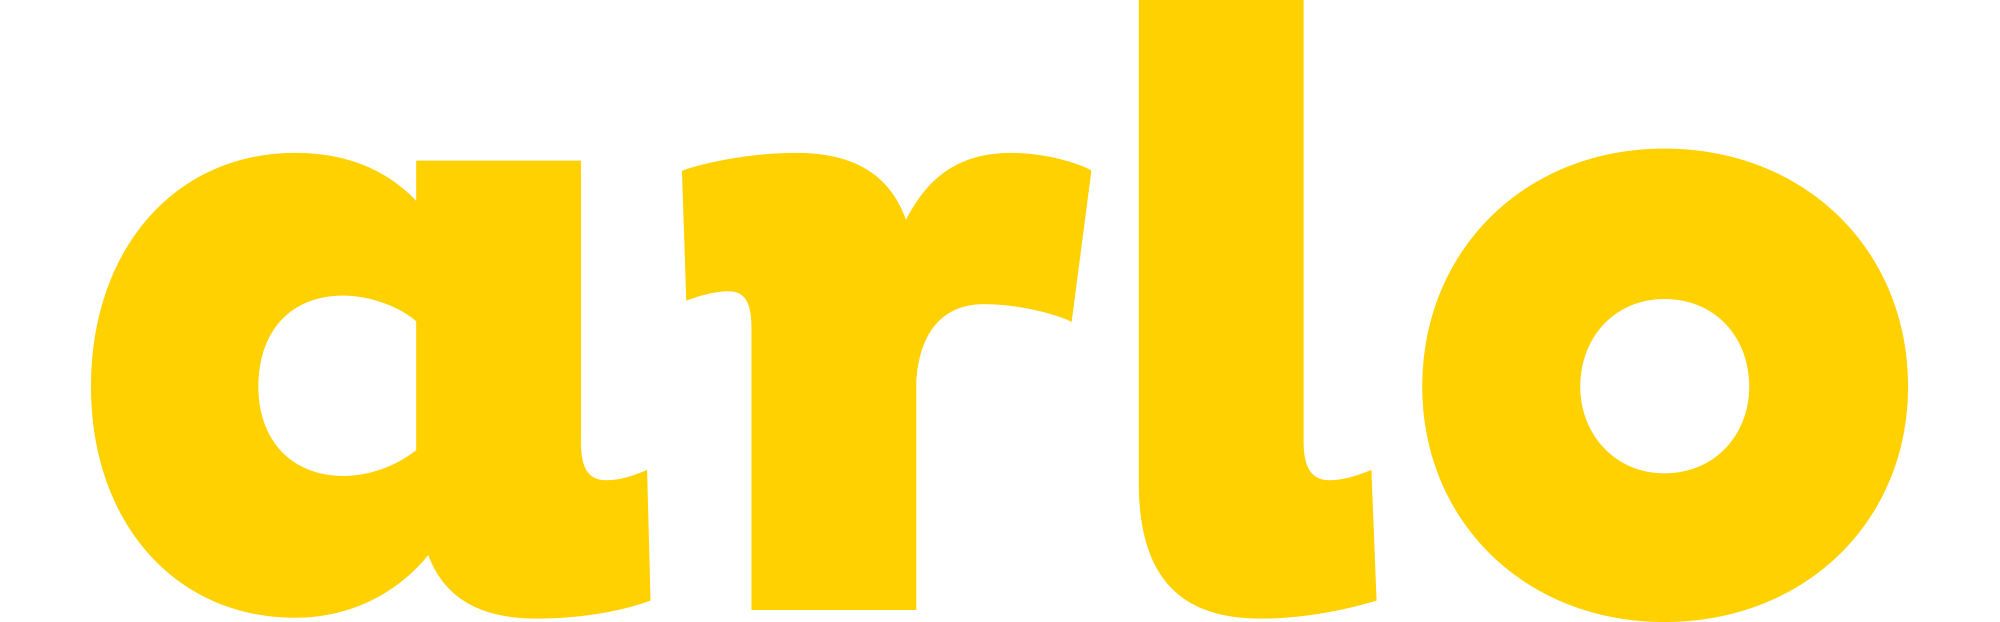 Arlo Logo - Arlo Logo Yellow Letteronly 2000